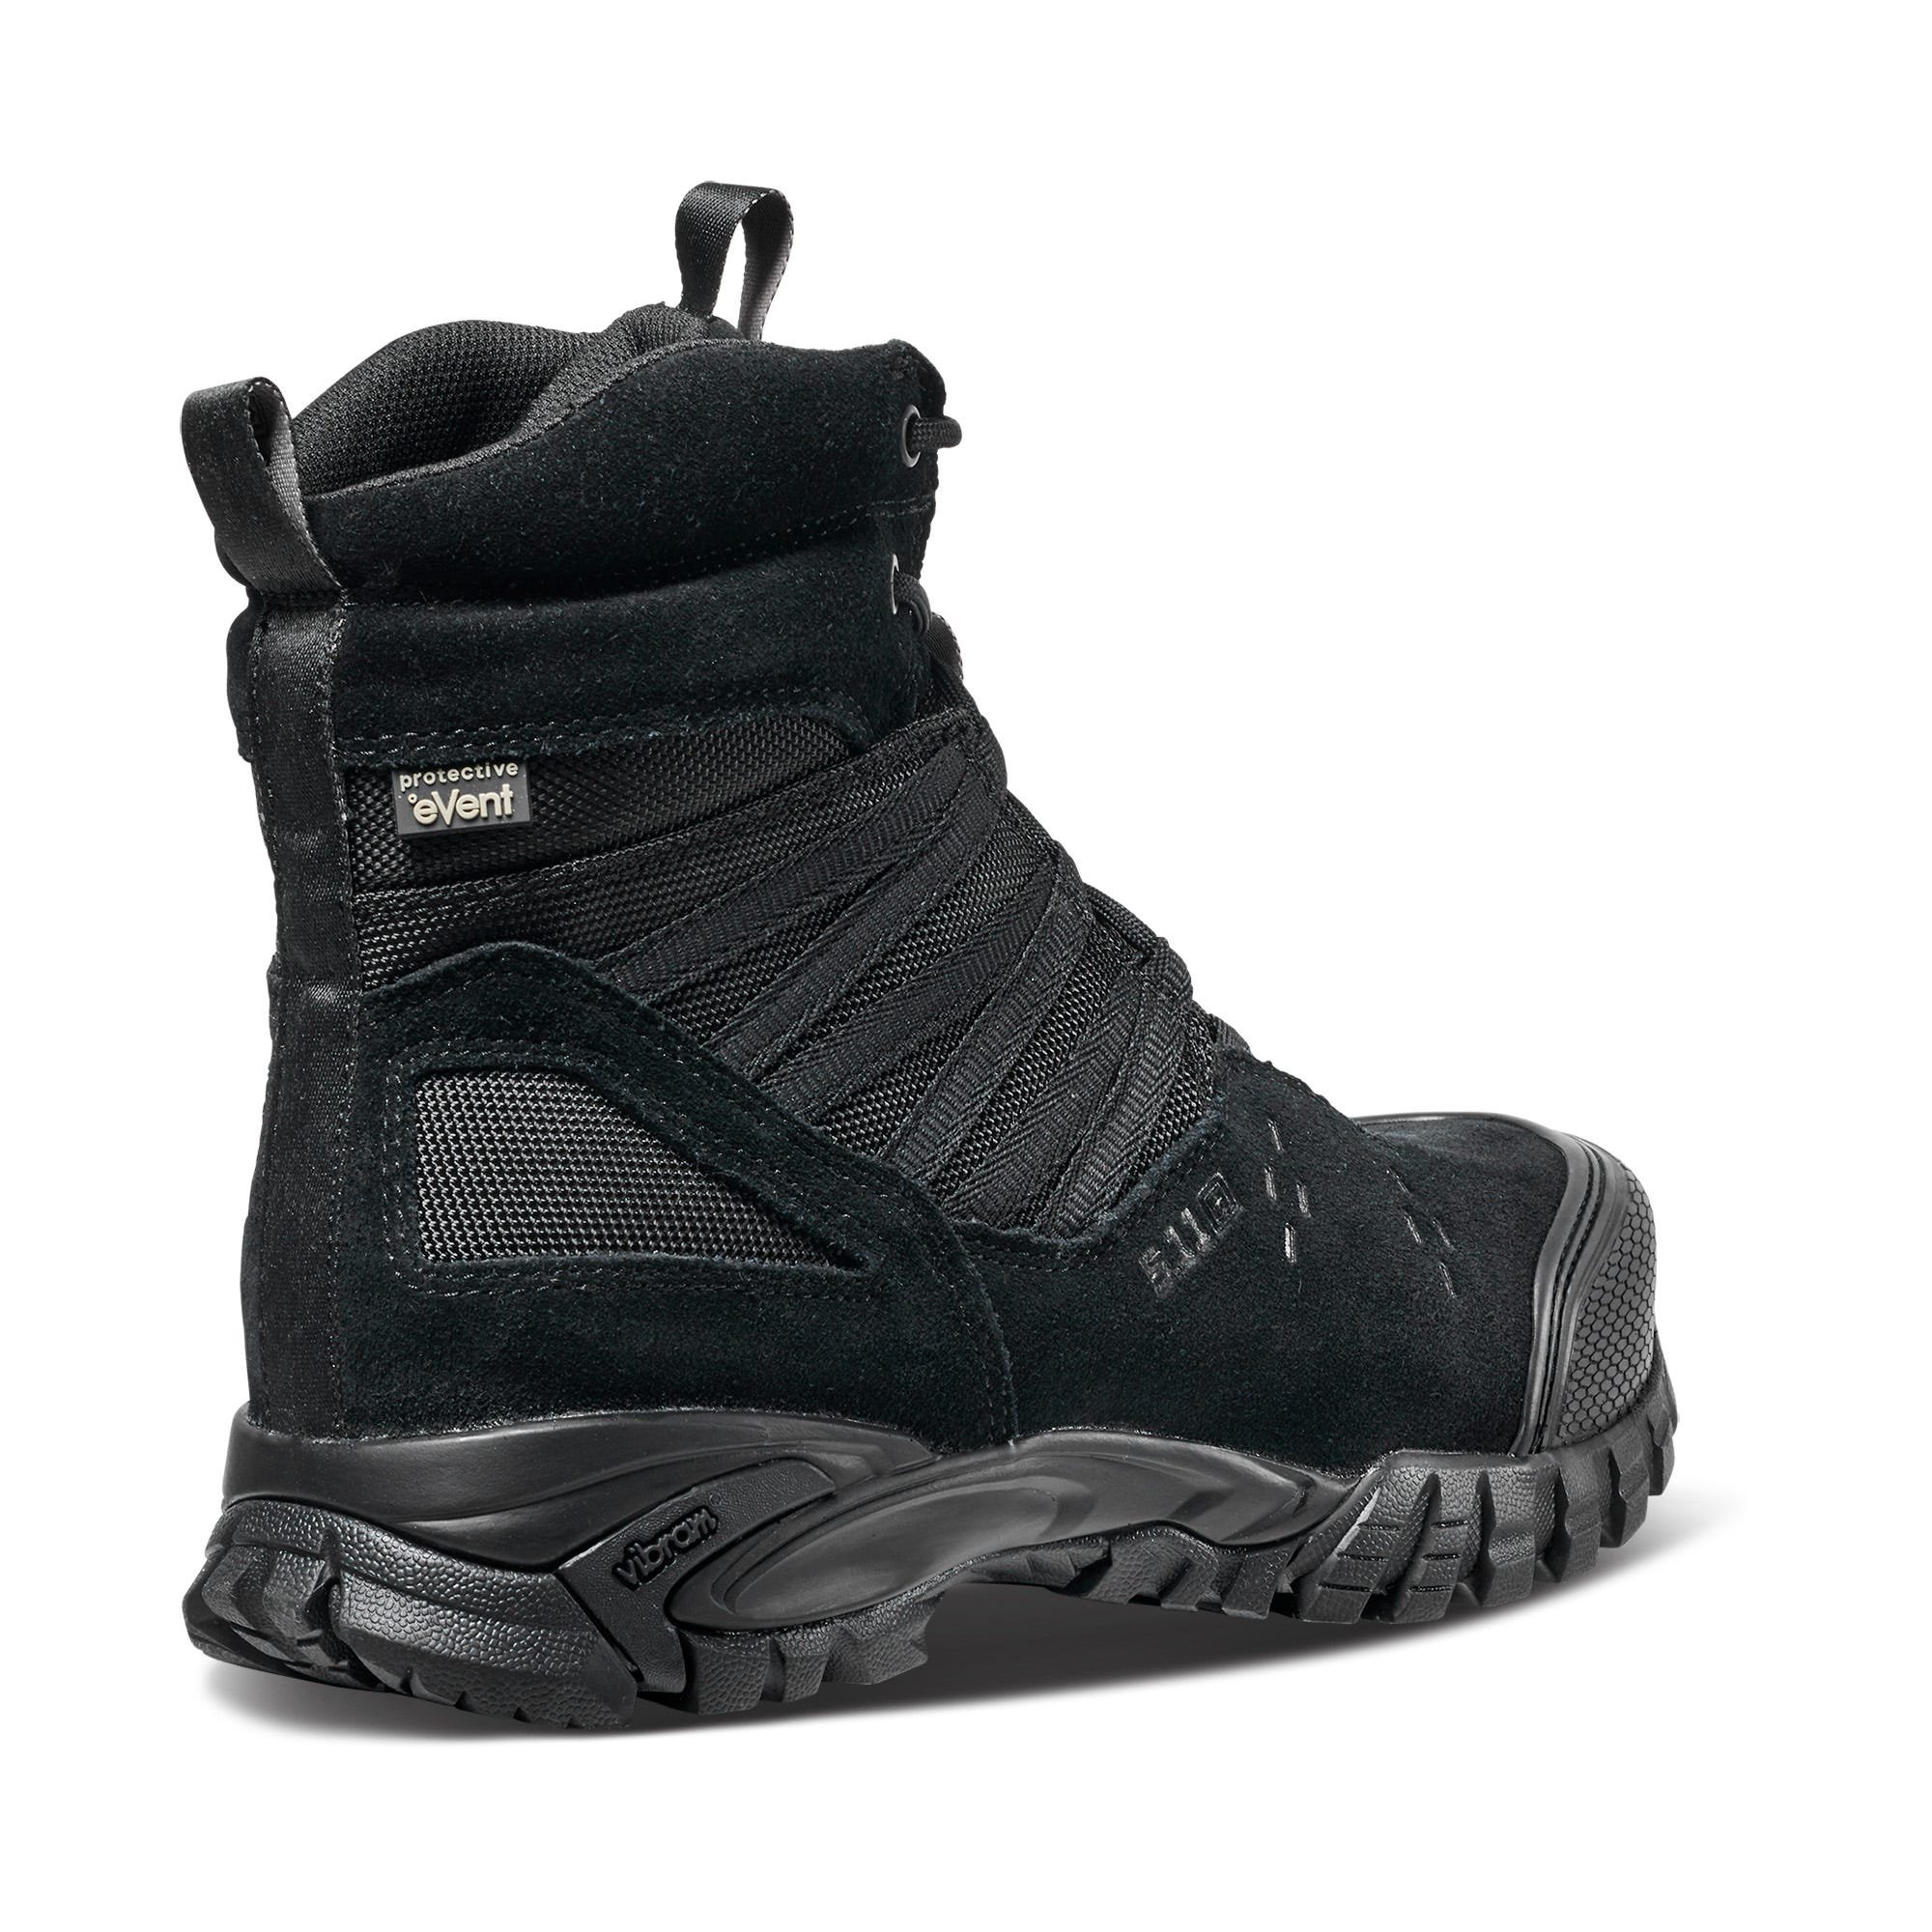 5.11 Work Gear Men's Union Waterproof 6-Inch Work Boots, Shock Absorbing Insole, Black, 7.5 Wide, Style 12390 - image 2 of 8